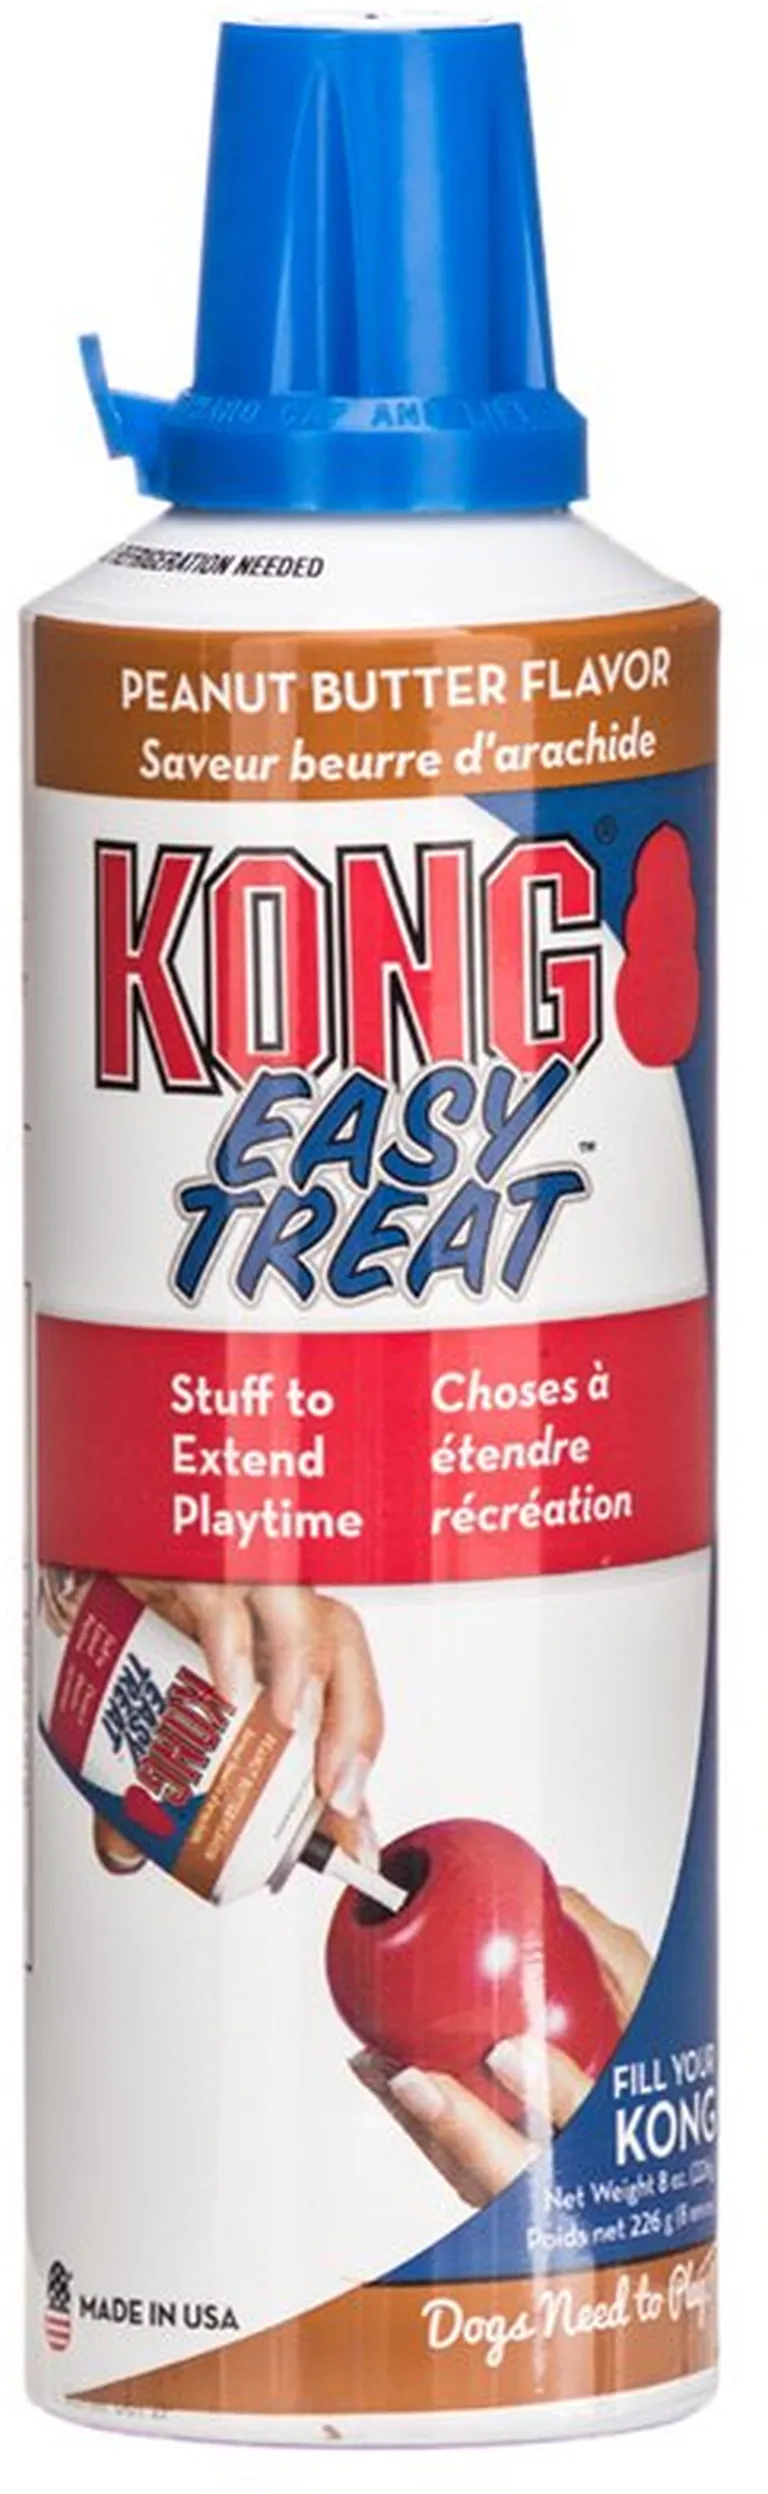 KONG Easy Treat Peanut Butter Flavor Photo 1